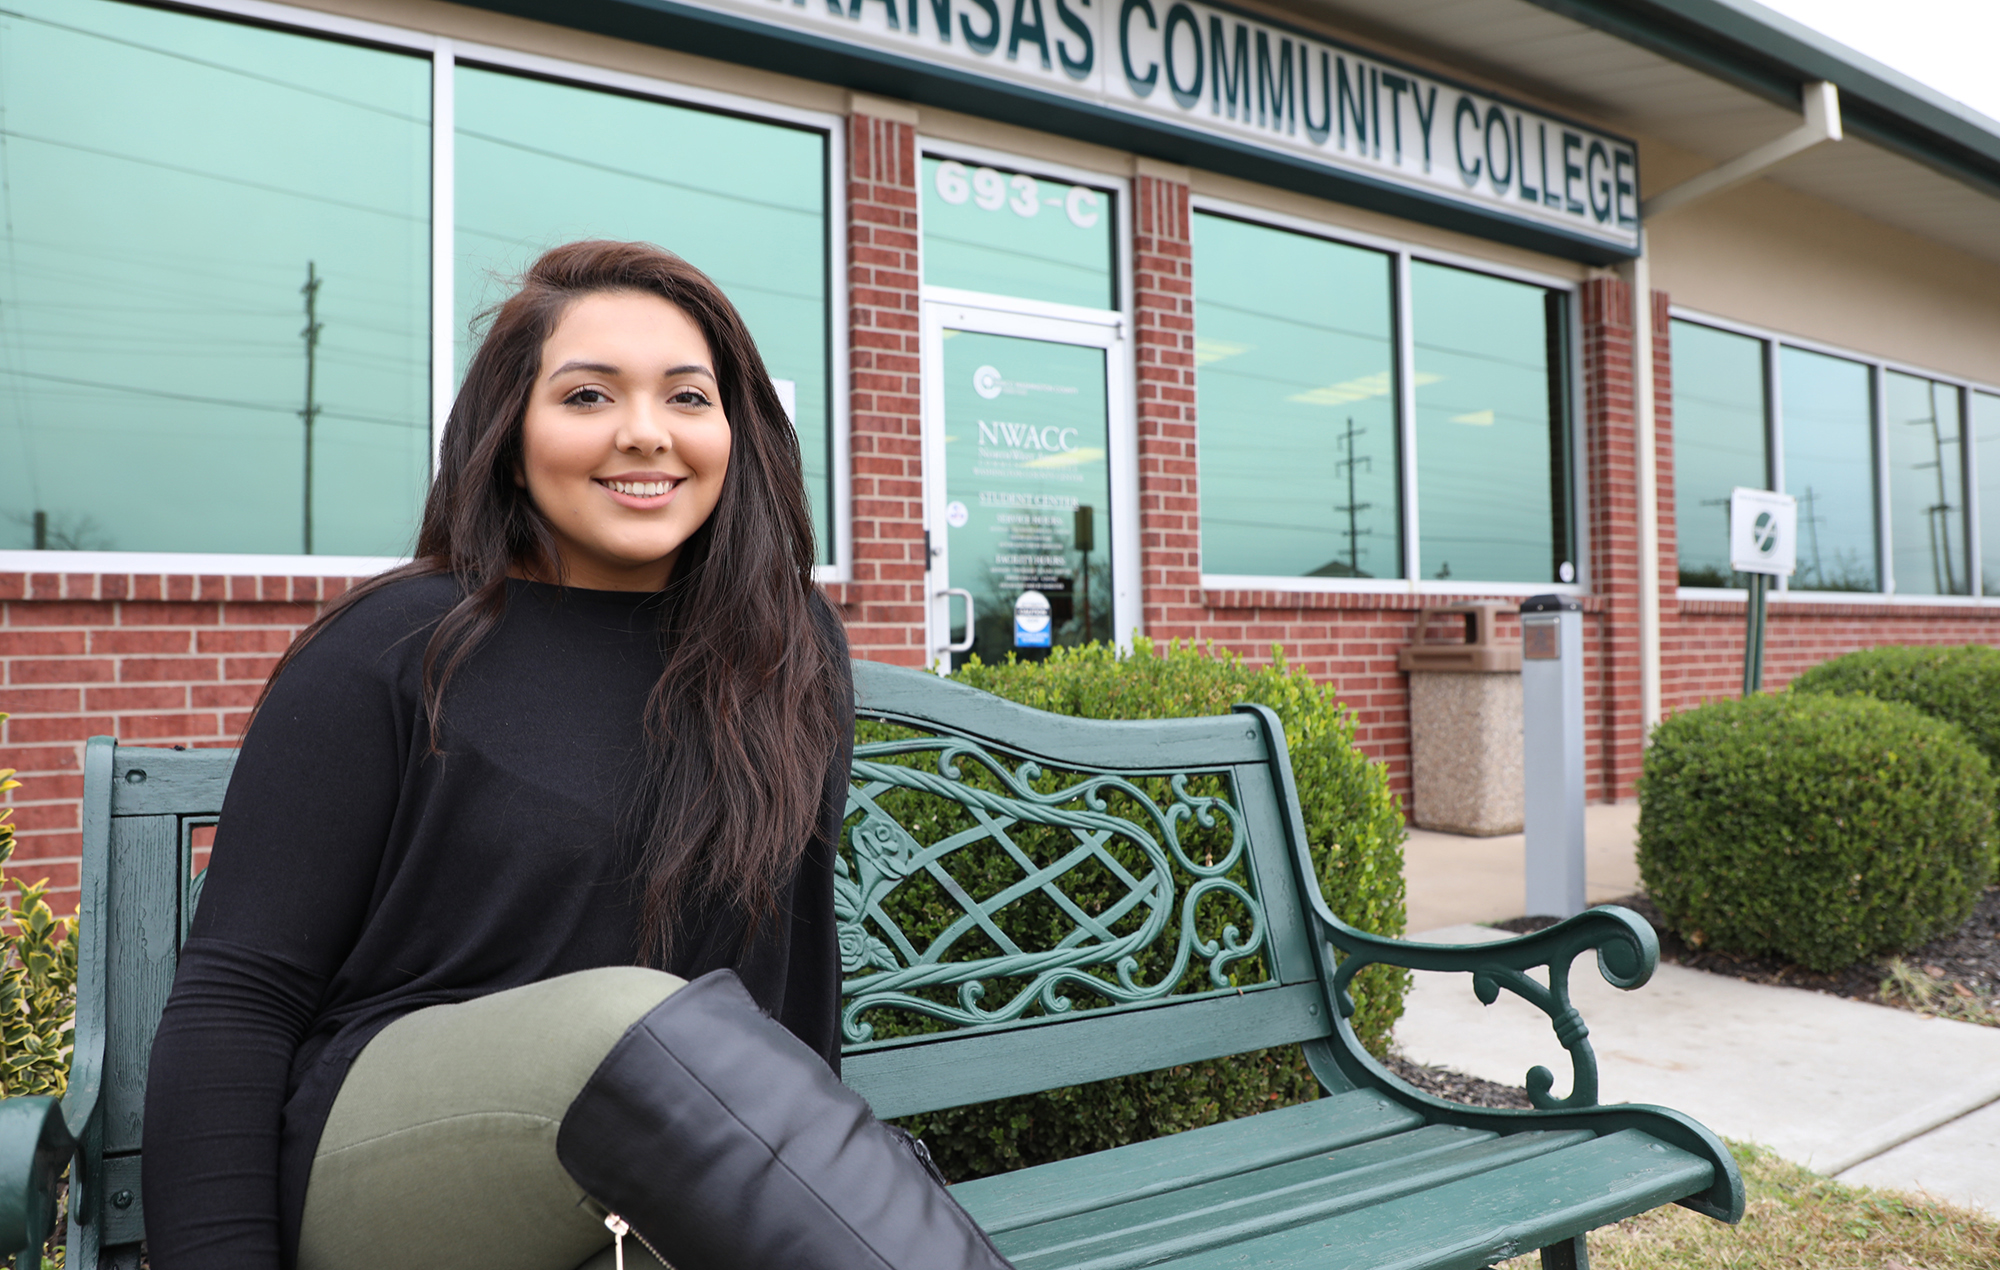 Female Hispanic student sitting outside on a bench